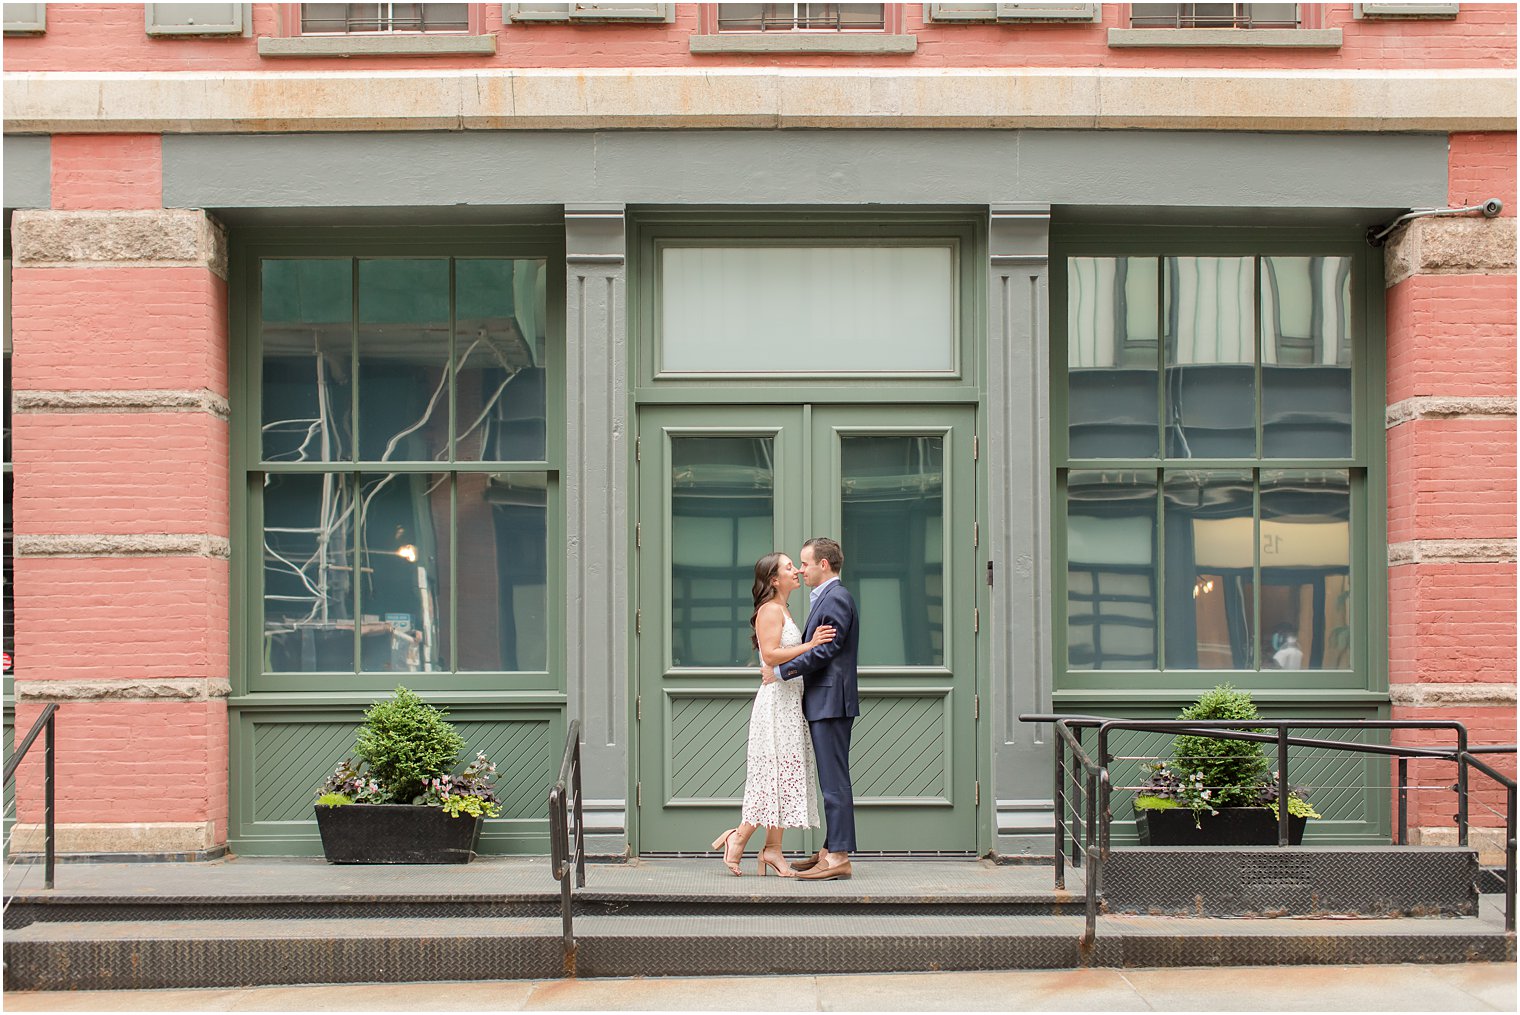 Engagement photos in Tribeca